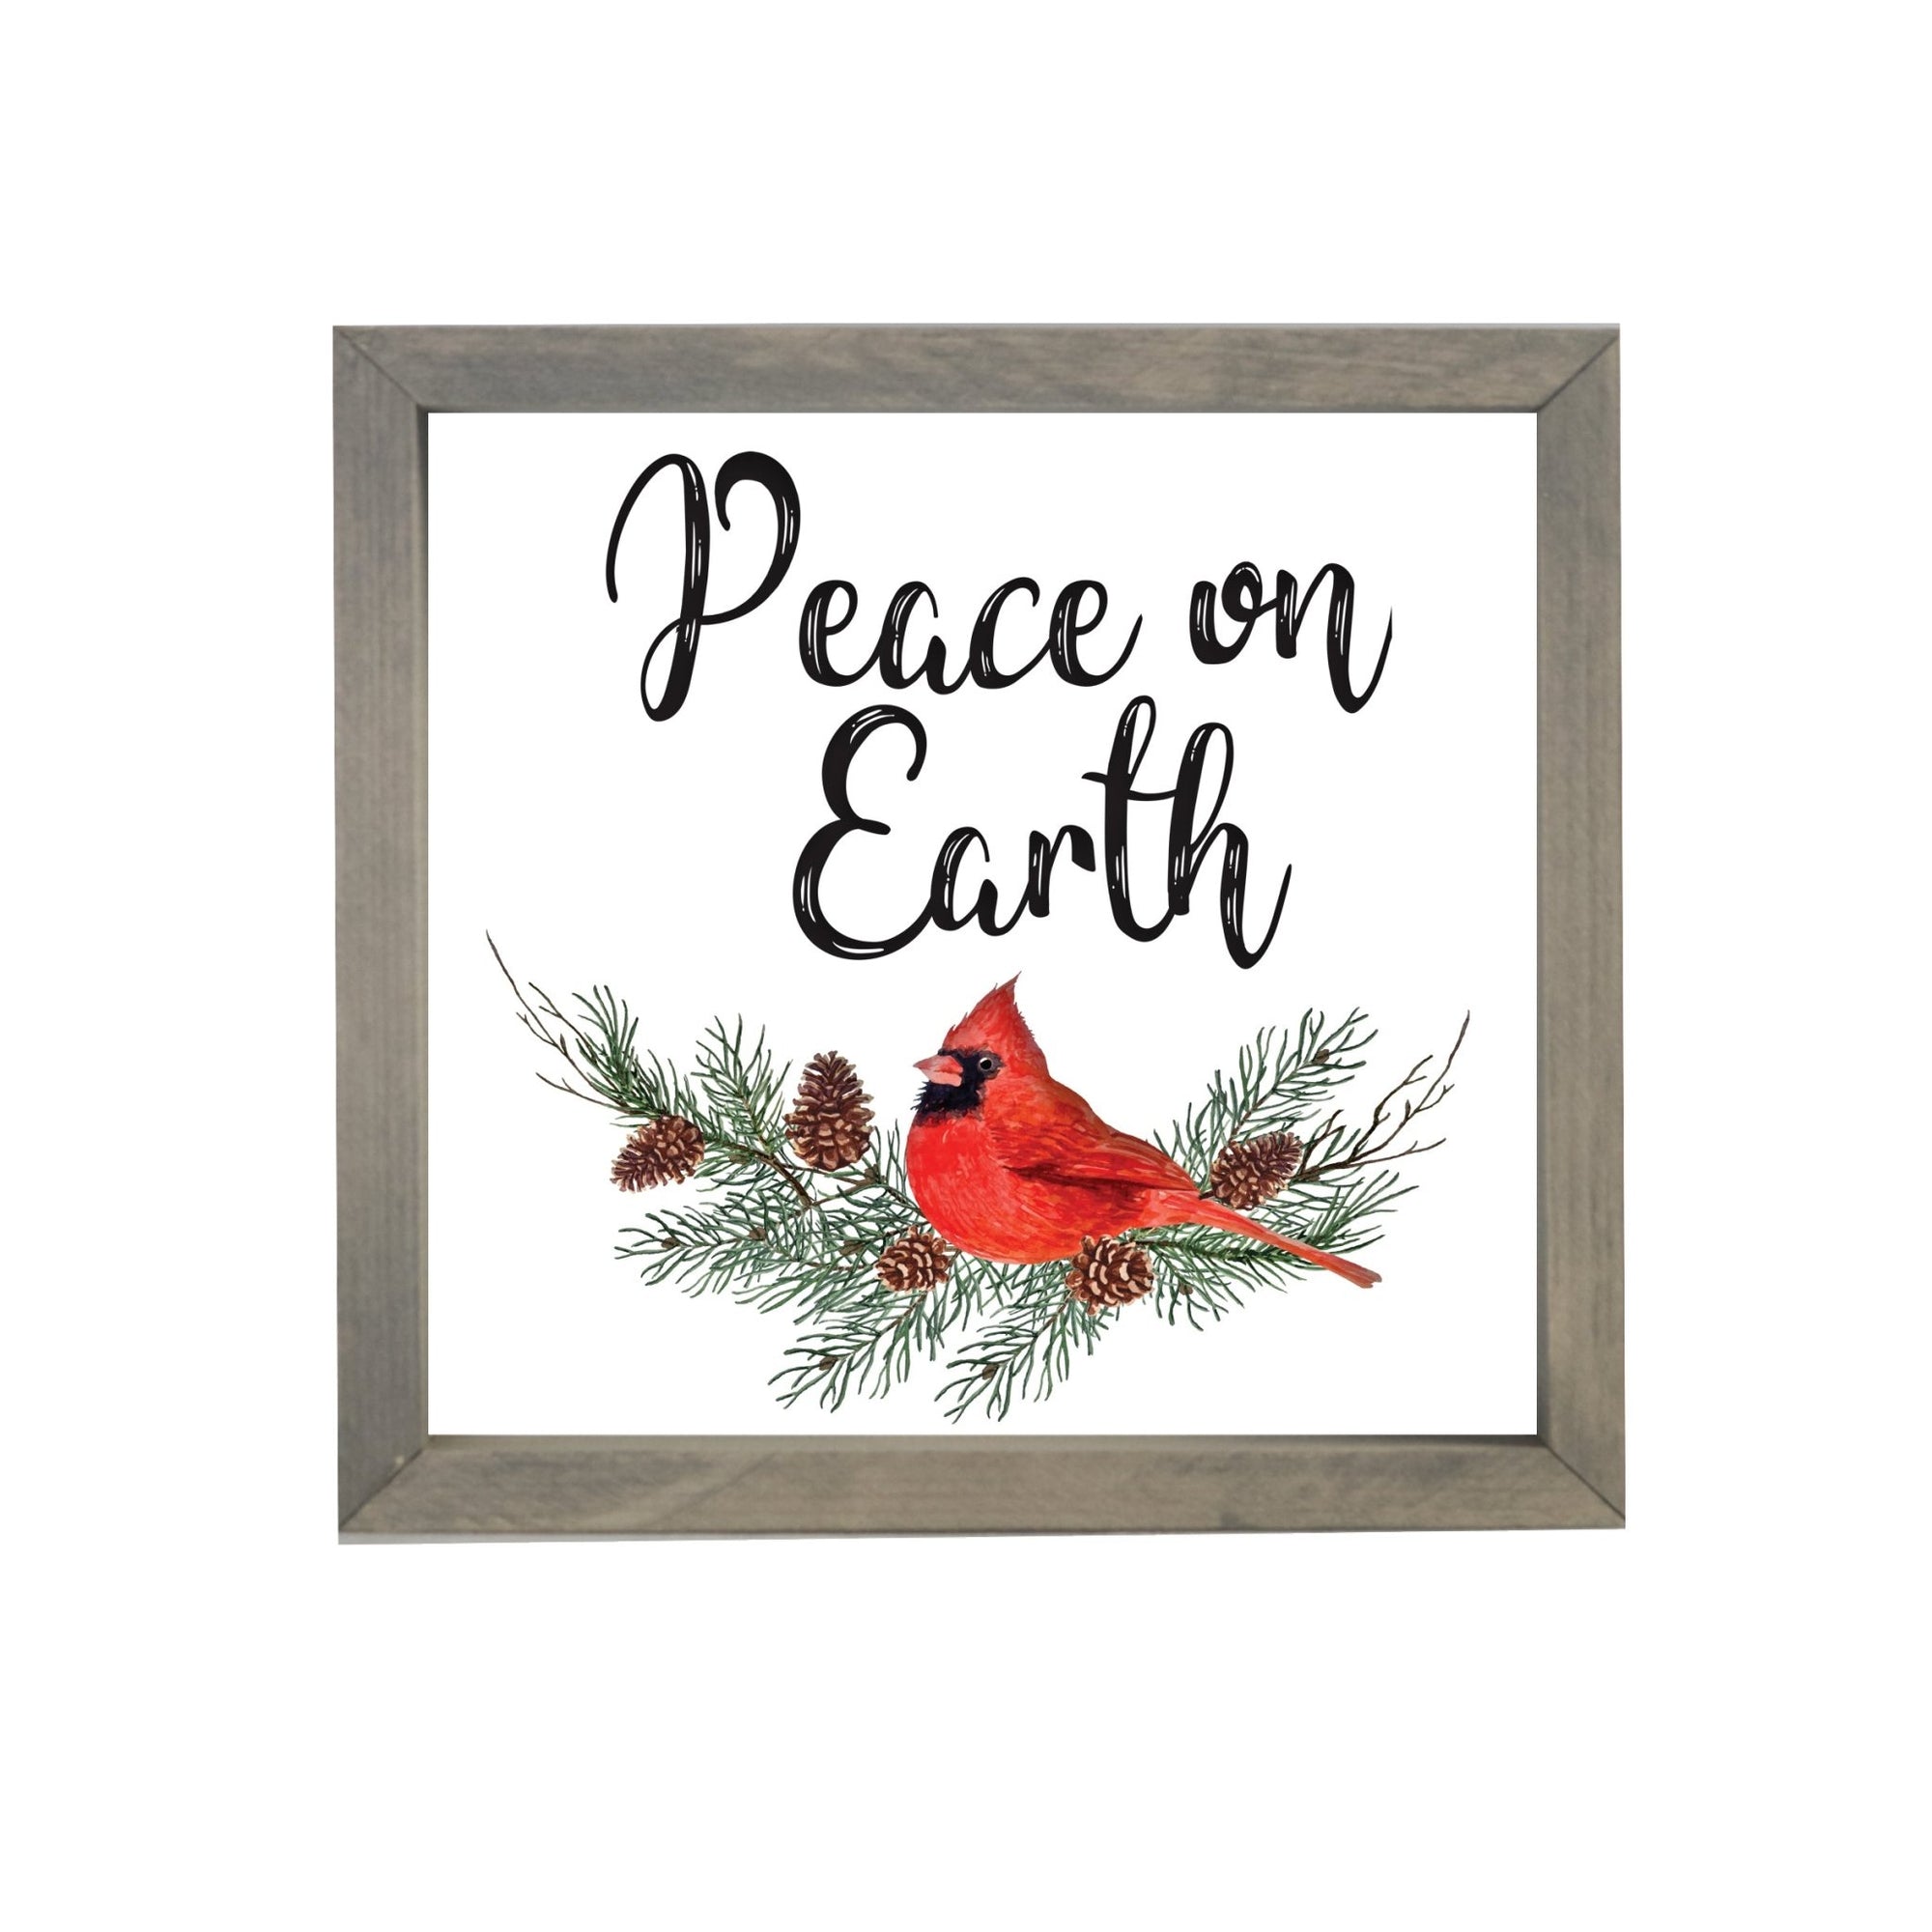 Merry Christmas Framed Shadow Box - Cardinal Peace On Earth - LifeSong Milestones